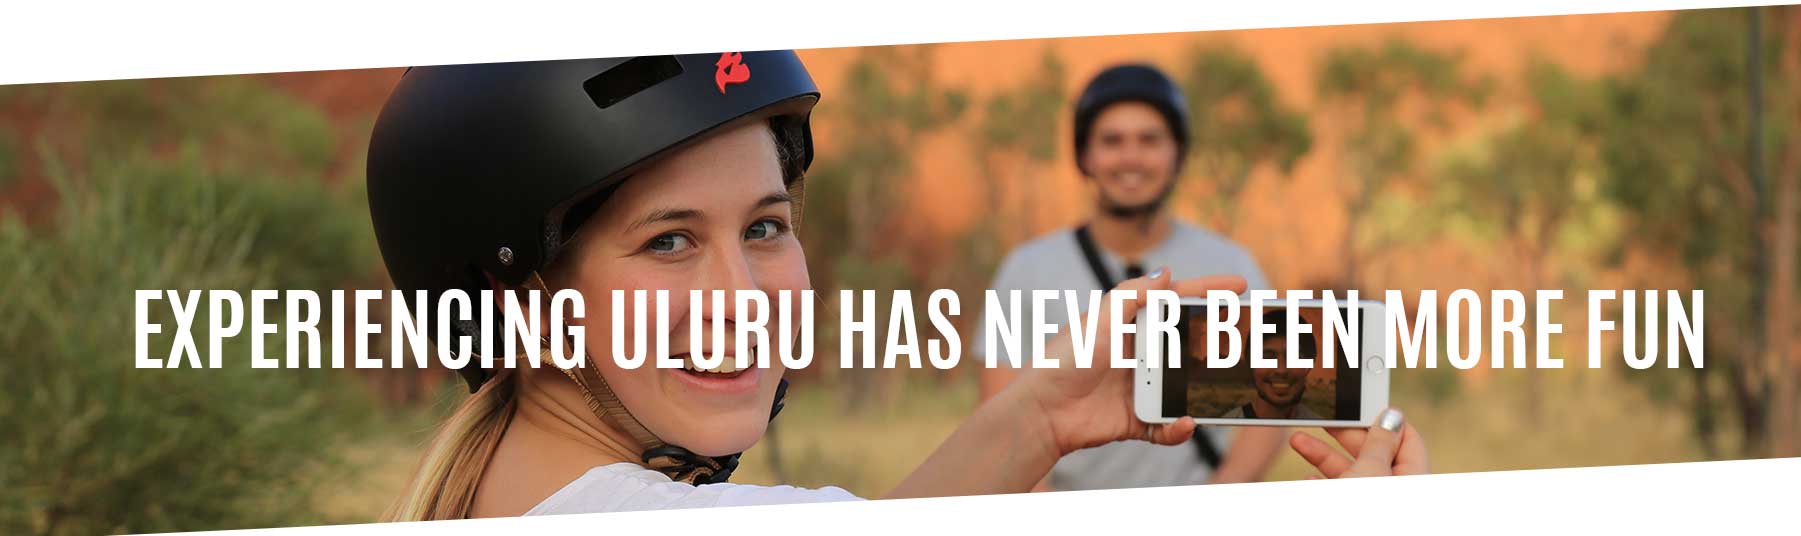 home-experiencing-uluru-has-never-been-more-fun